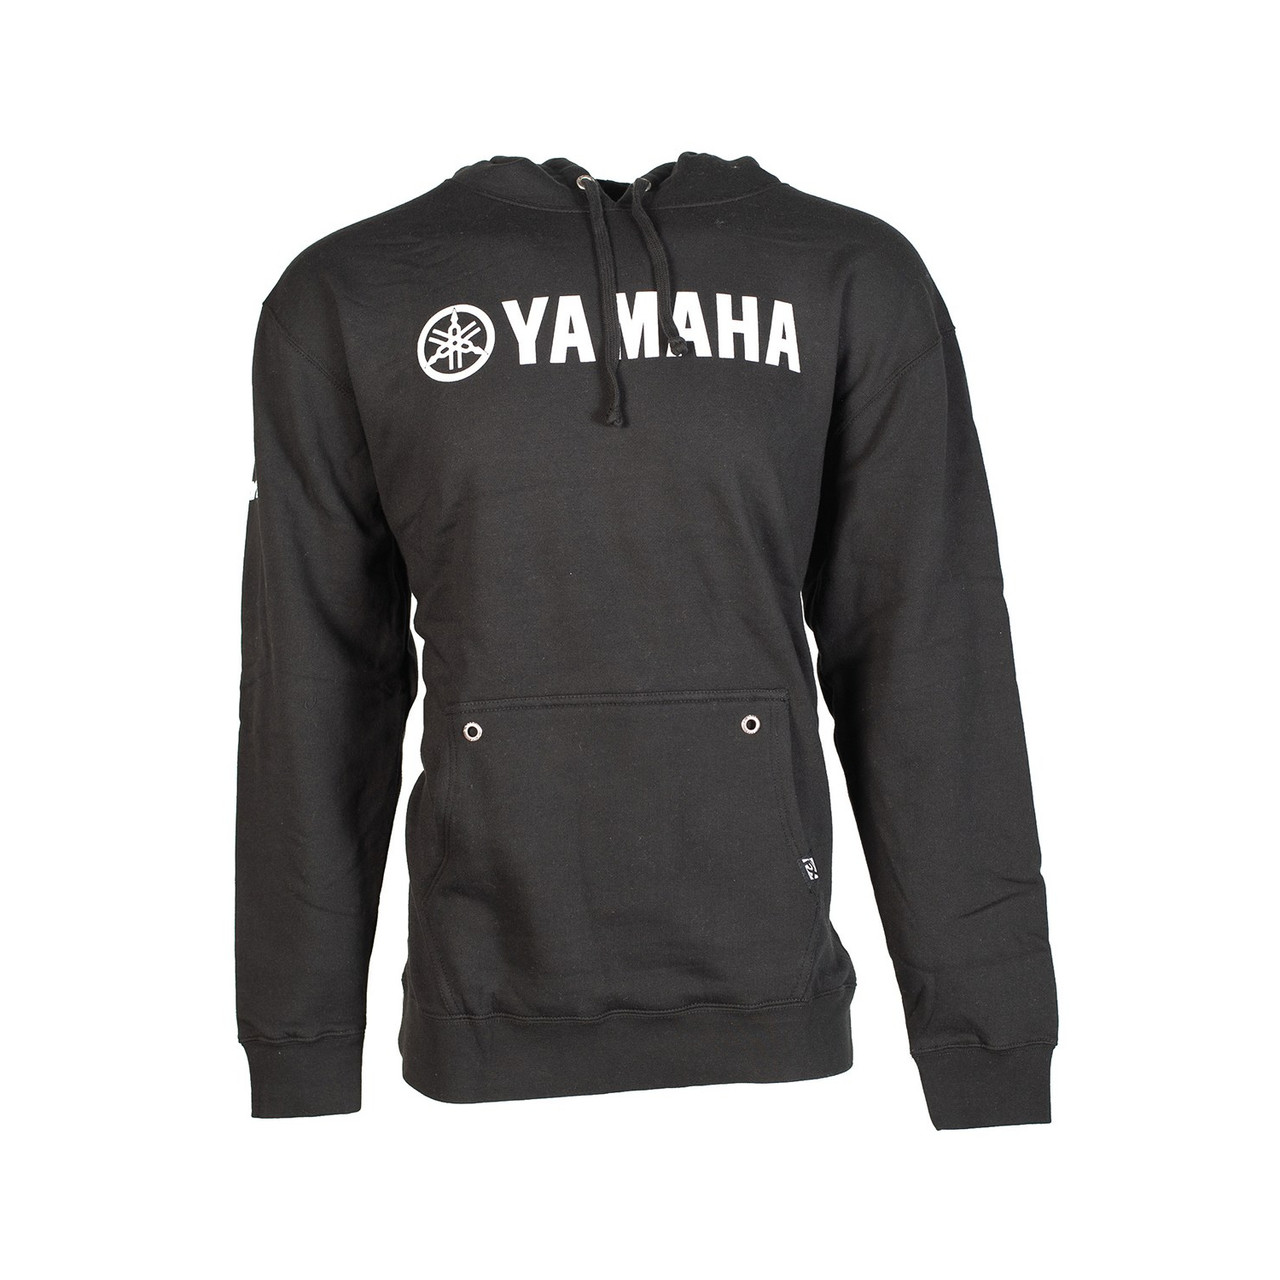 Yamaha New OEM, Factory Effex Men's Black Pullover Sweatshirt, VFE-17FTH-BK-LG